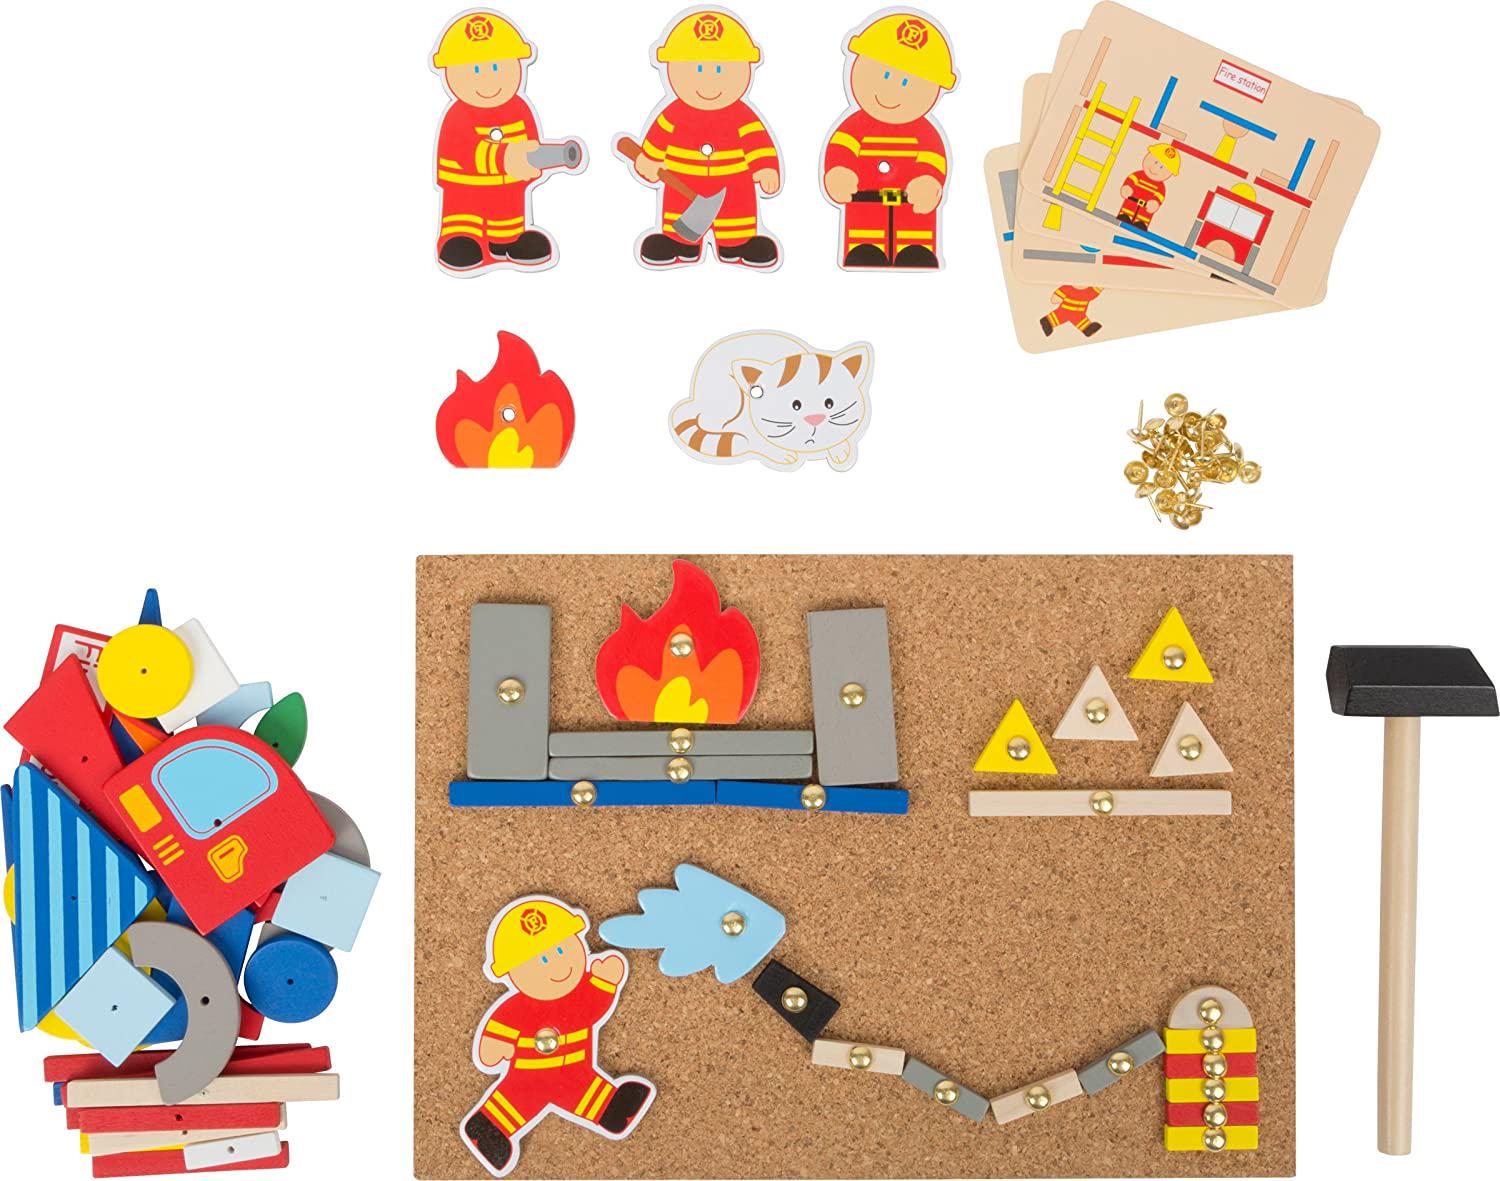 small foot wooden toys, small foot wooden toys Small Foot Wooden Toys Fireman Theme Hammer Arts and Crafts playset Designed for Children Ages 6+, Multi (10581)